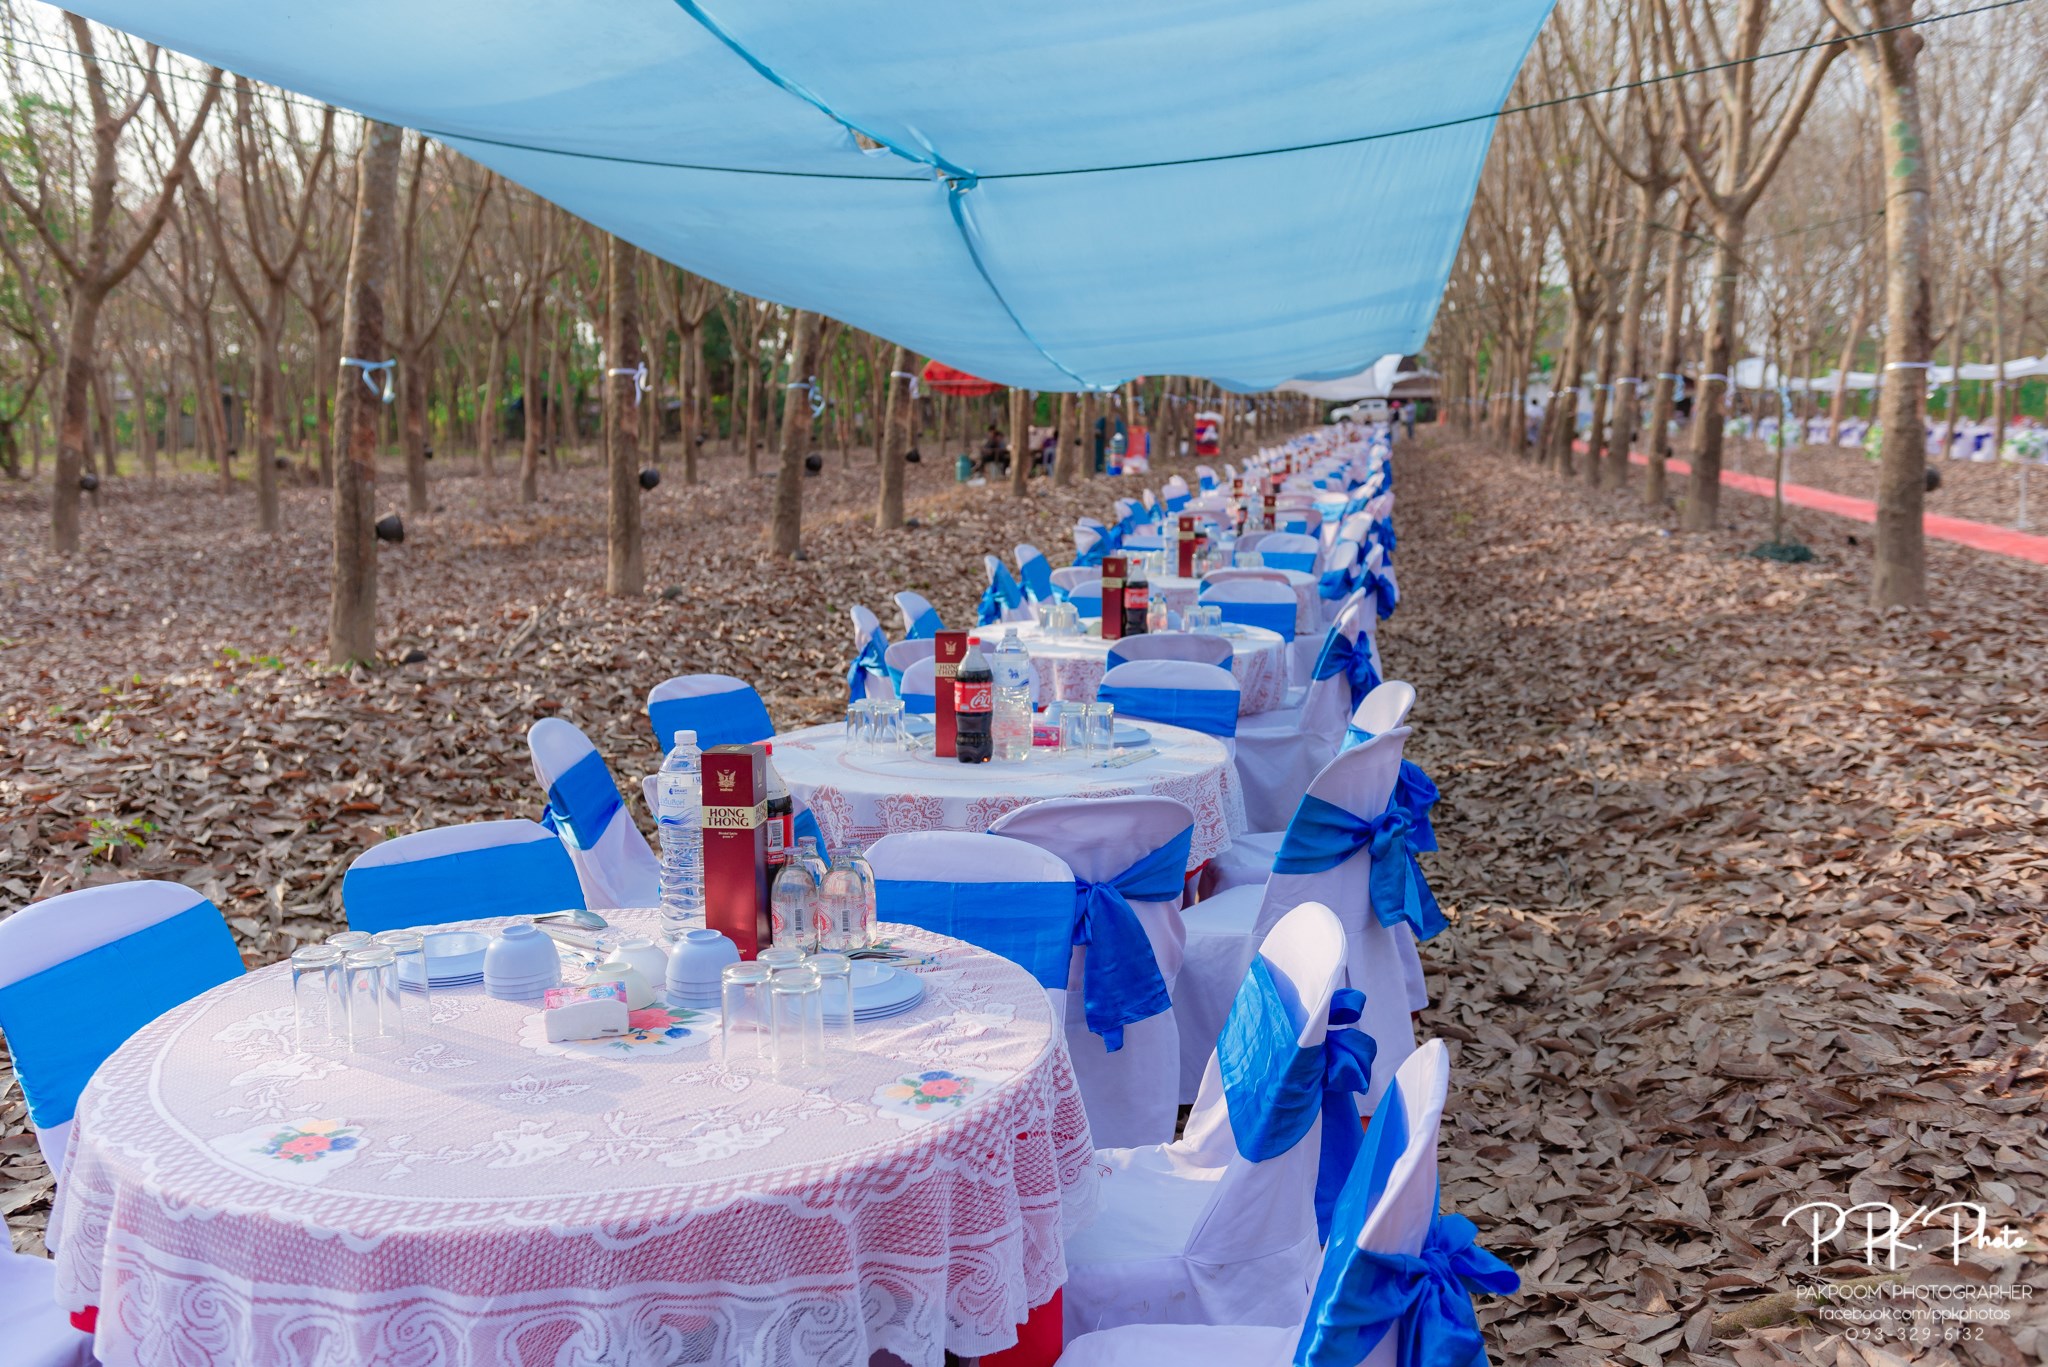 [FOTO] Pengantin Nekad Kahwin Dalam Kebun Getah, Netizen Pula Risau Benda Lain